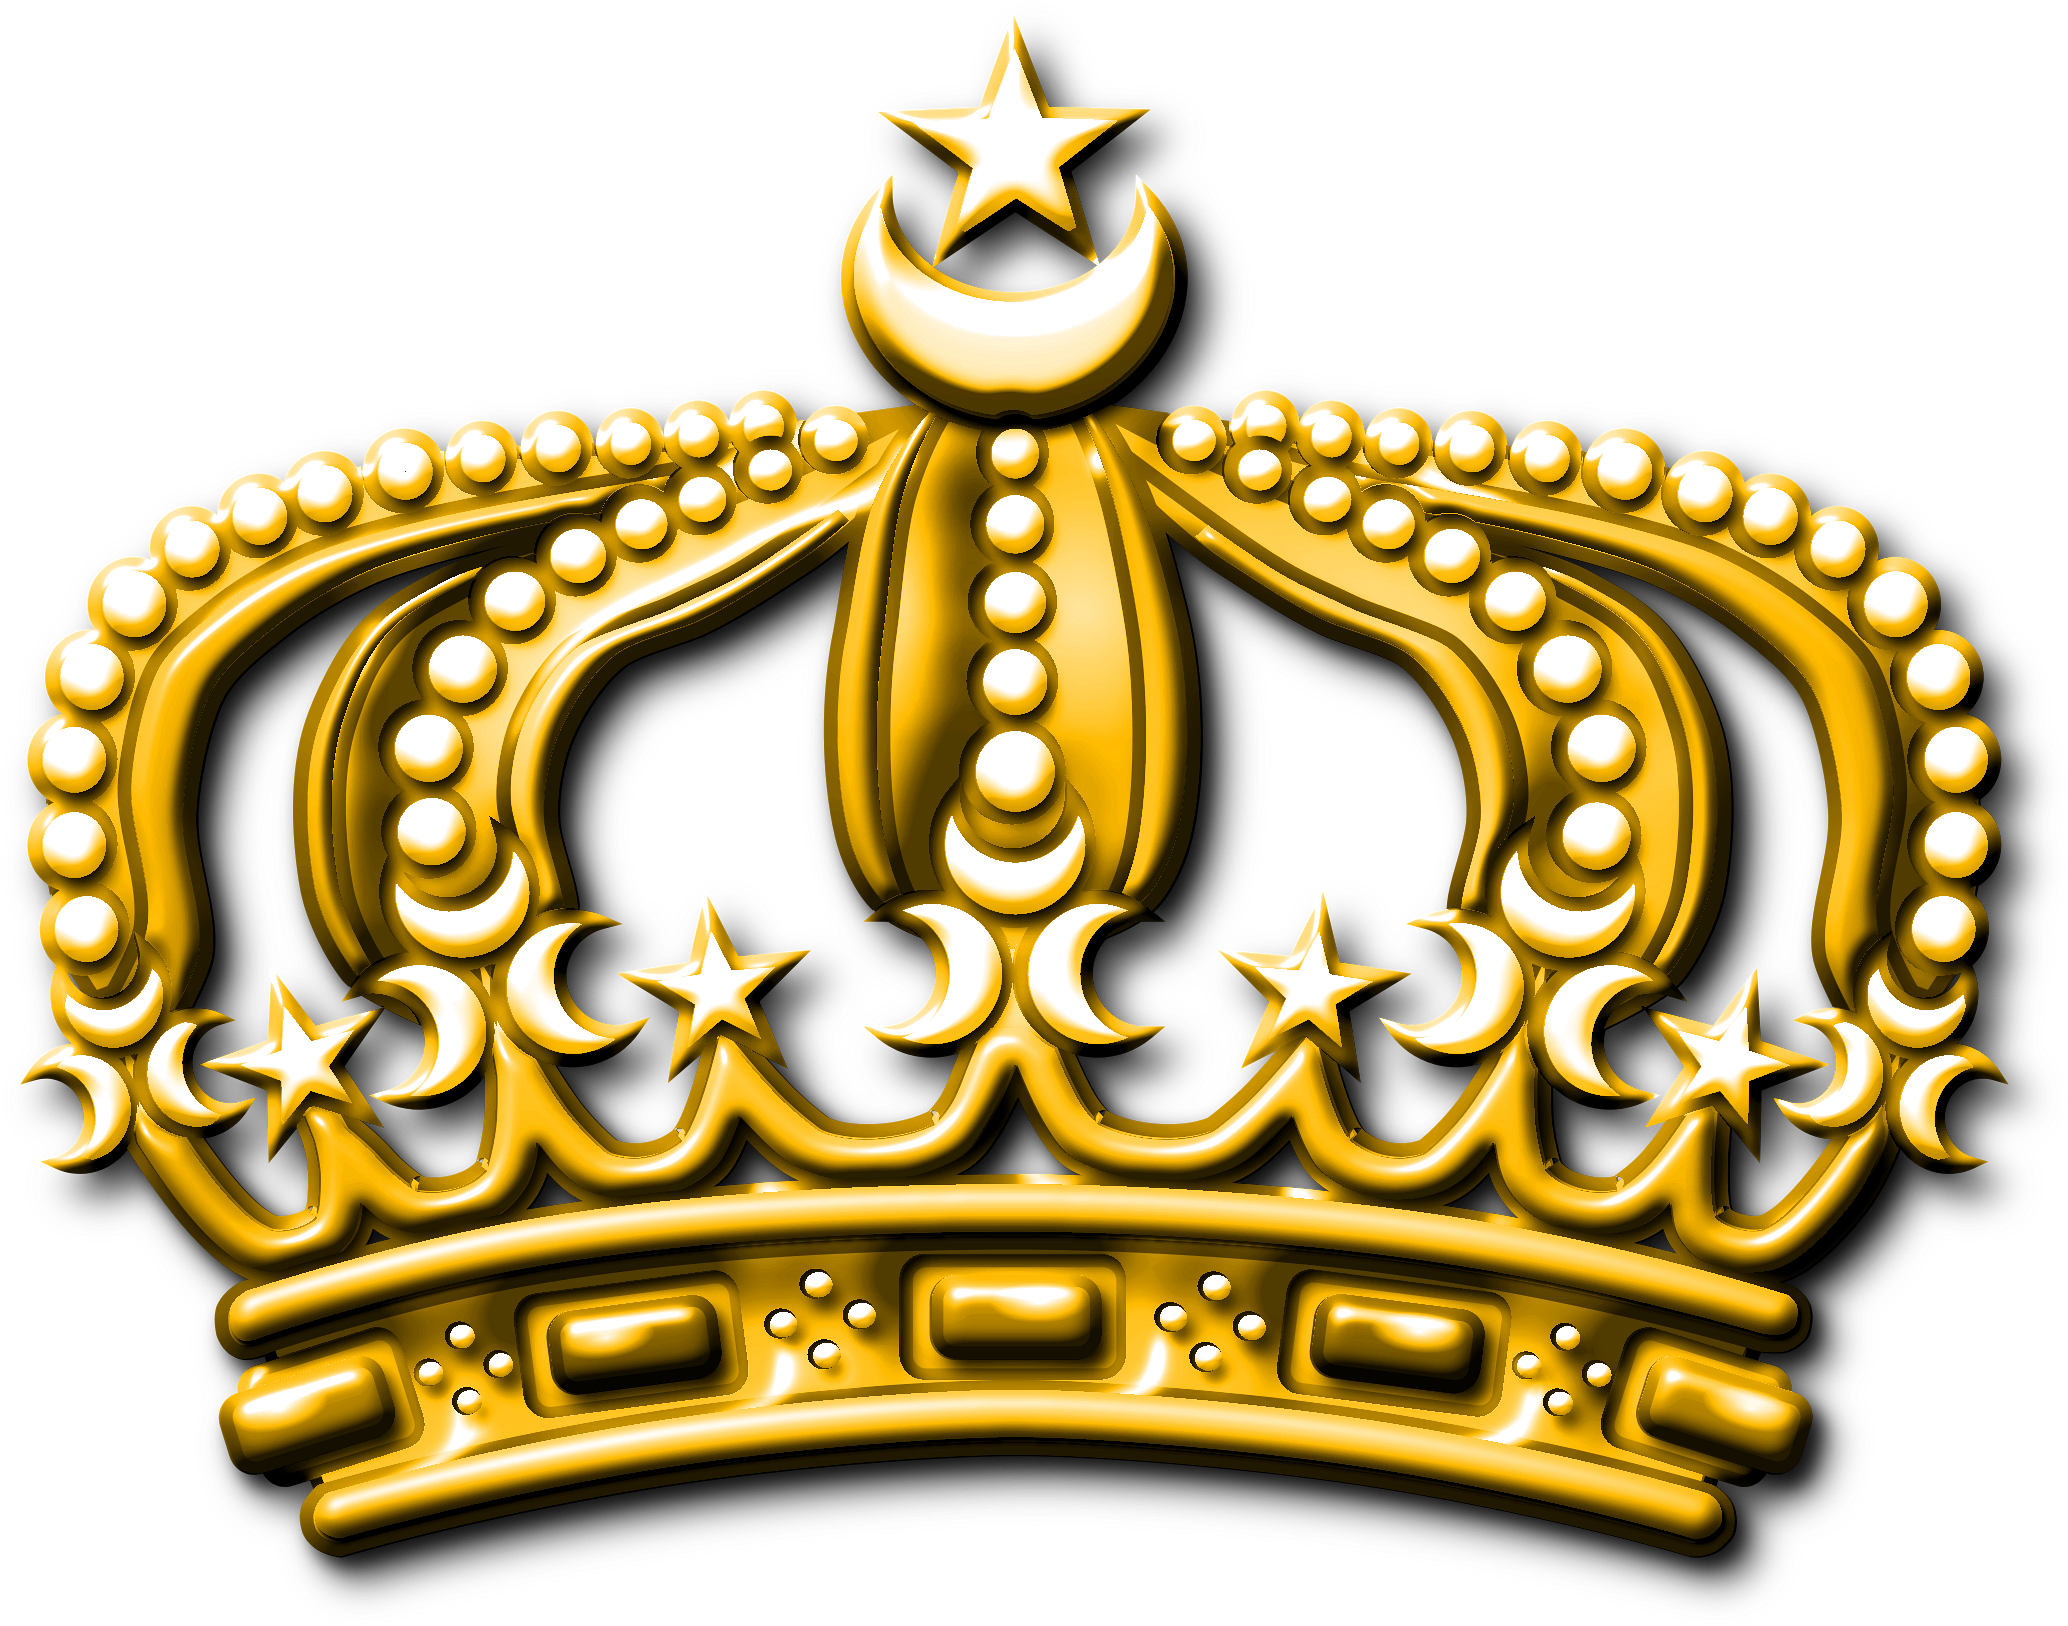 King Crown Pictures - King Crown Logo Png (2400x1759)